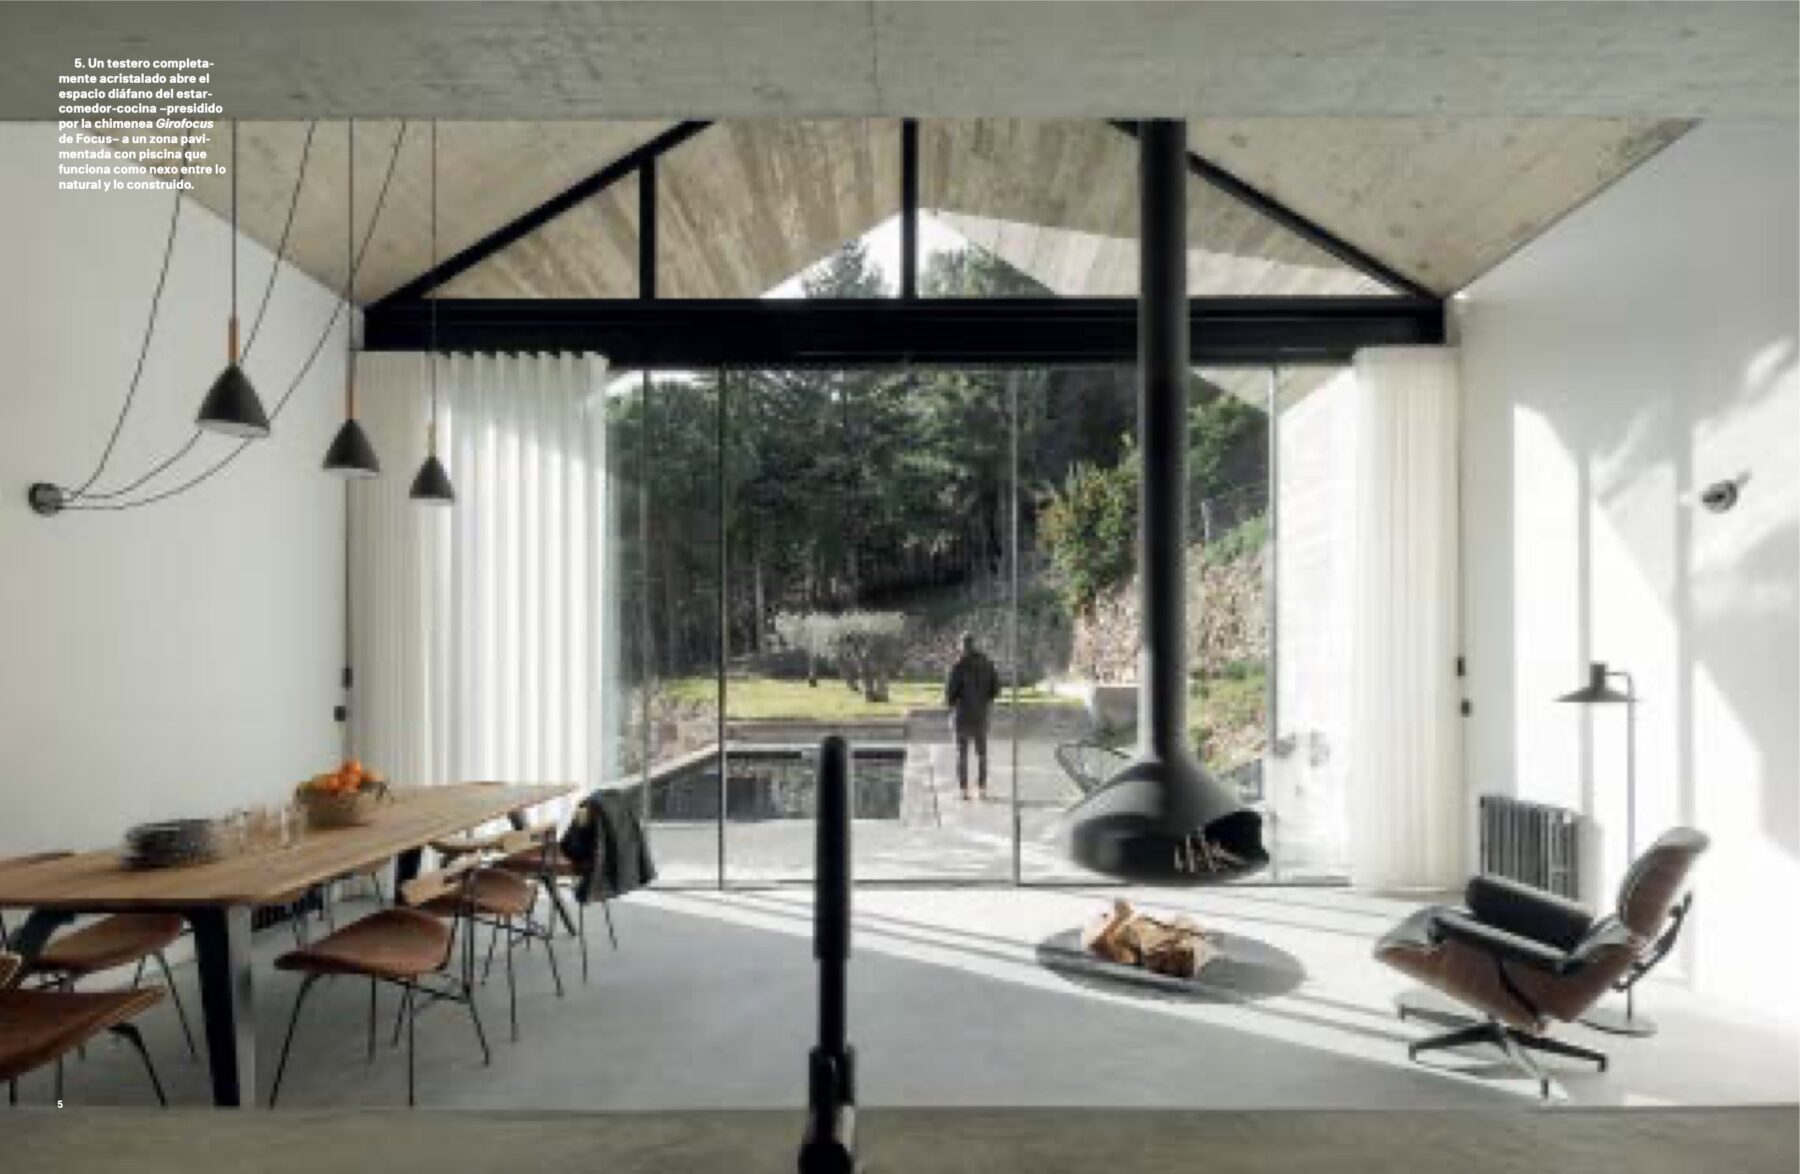 Diseño Interior #356 do atelier Filipe Pina Arquitectura com fotografia arquitetura de ivo tavares studio - architectural photography